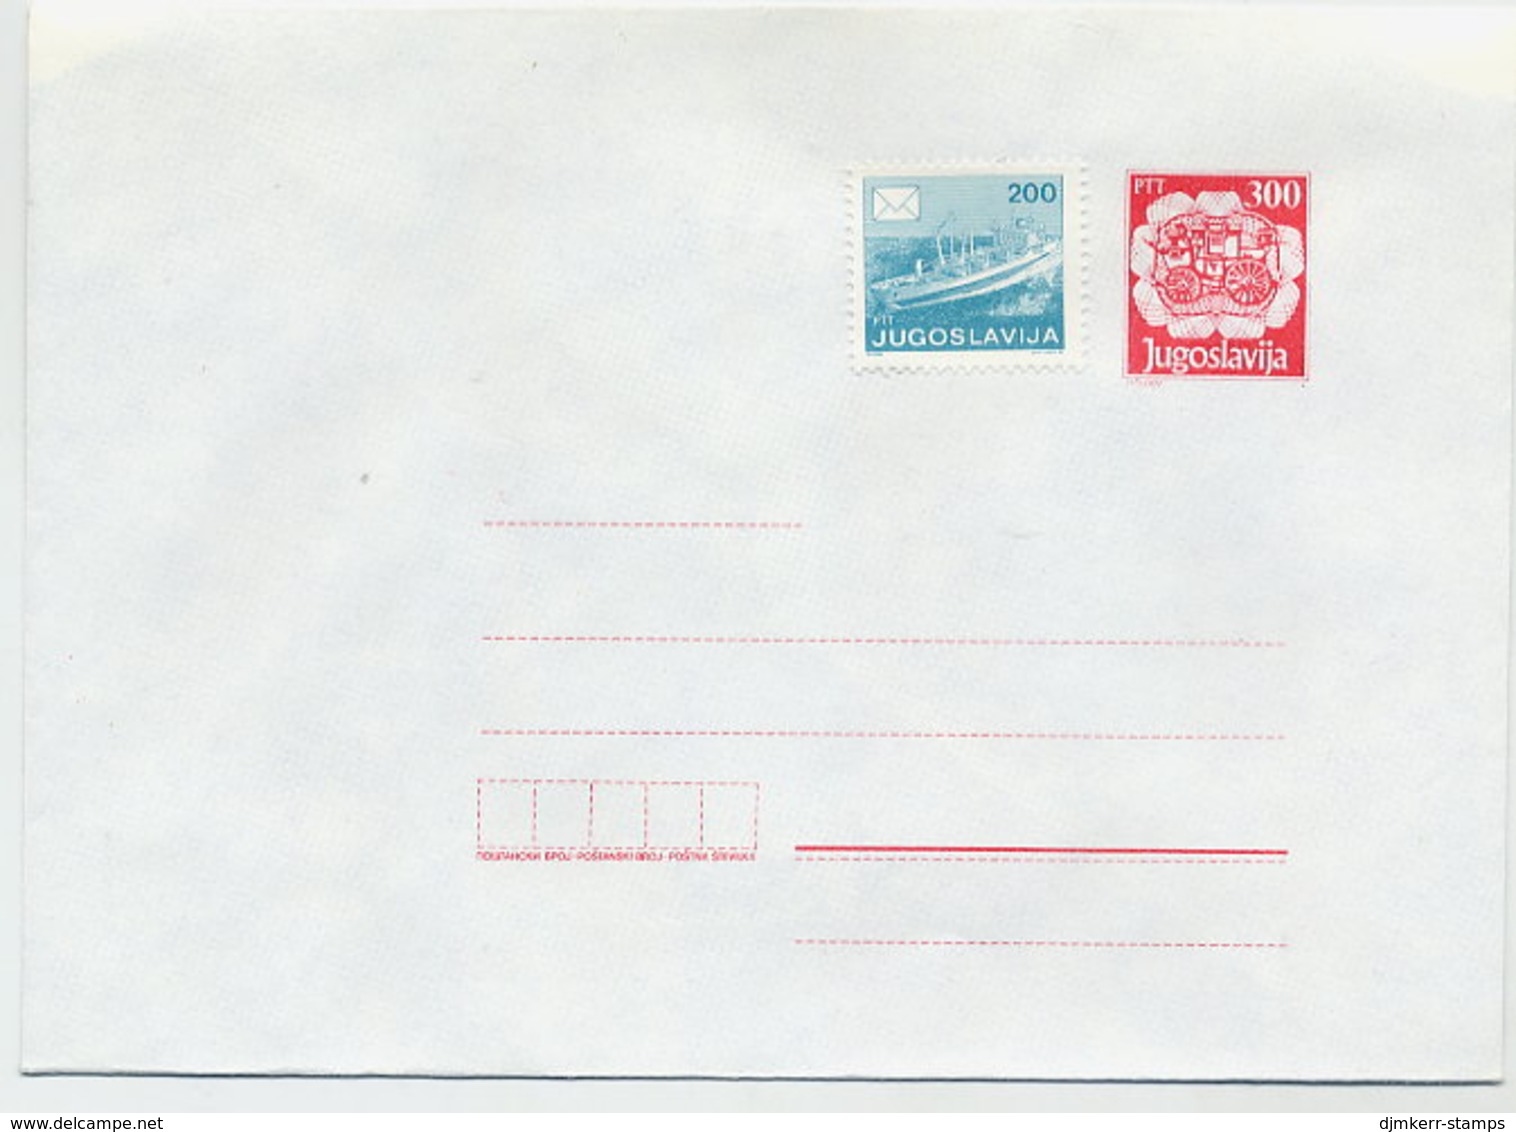 YUGOSLAVIA 1989 Postal Coach 300. D. Envelope + 200 D.stamp, Unused.  Michel U89 - Interi Postali